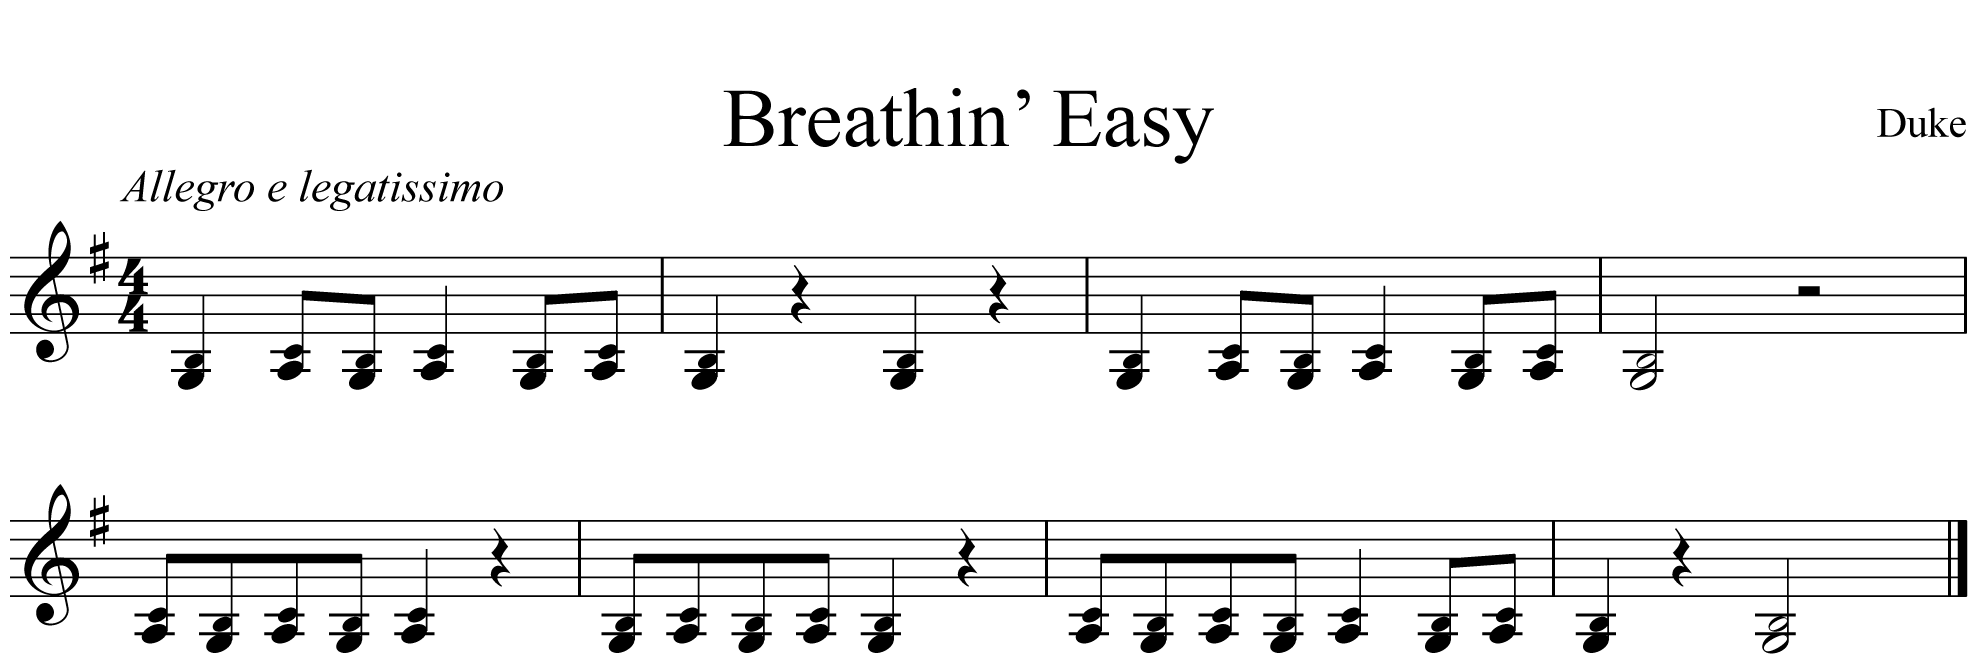 Breathin' Easy Clarinet Music Notation